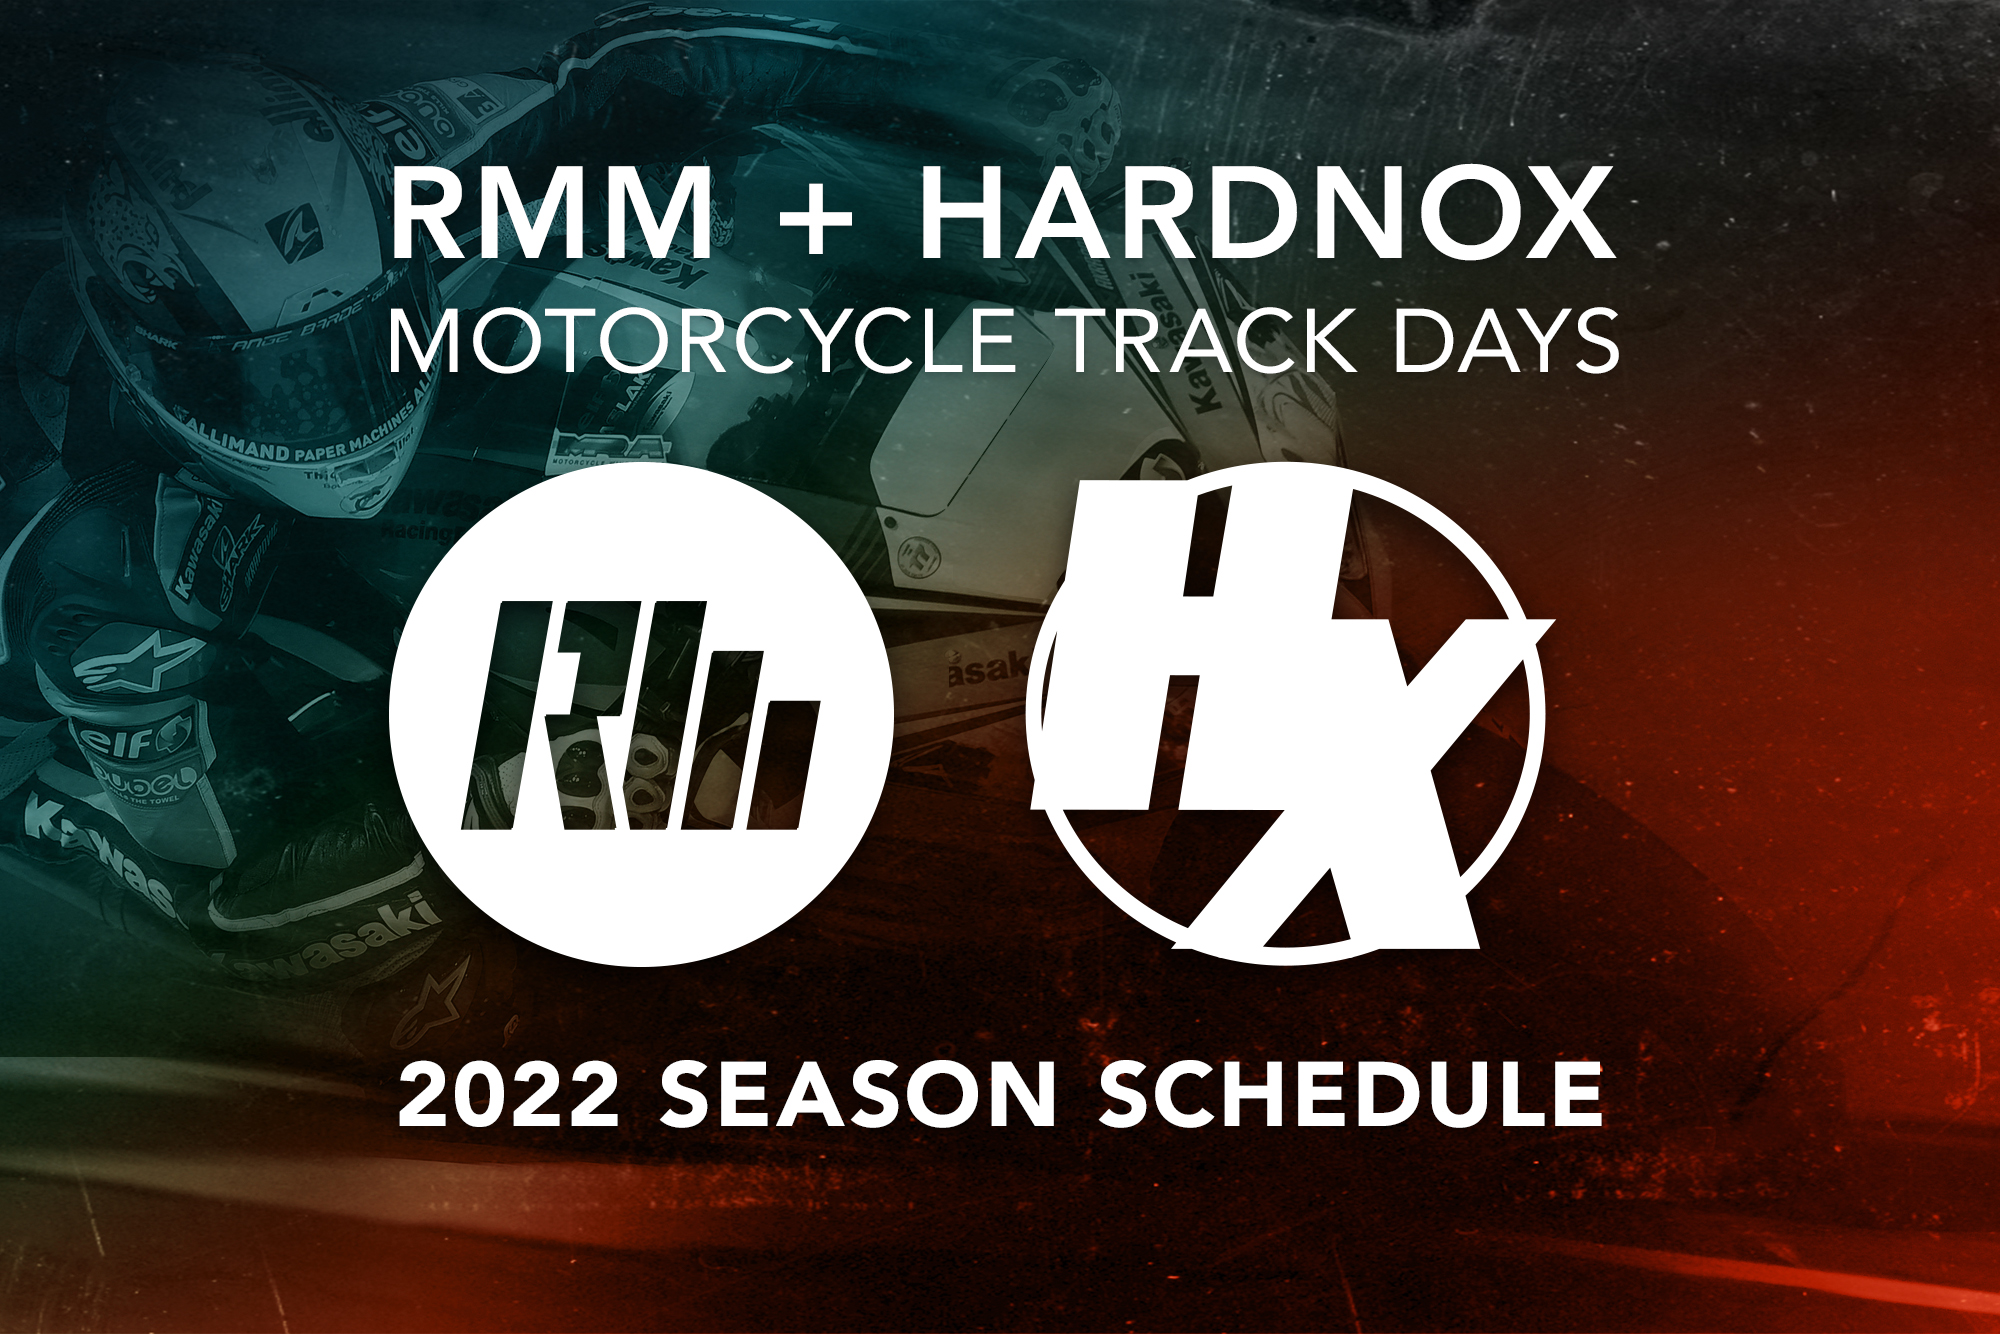 RMM + HARDNOX 2022 Motorcycle Track Day Schedule